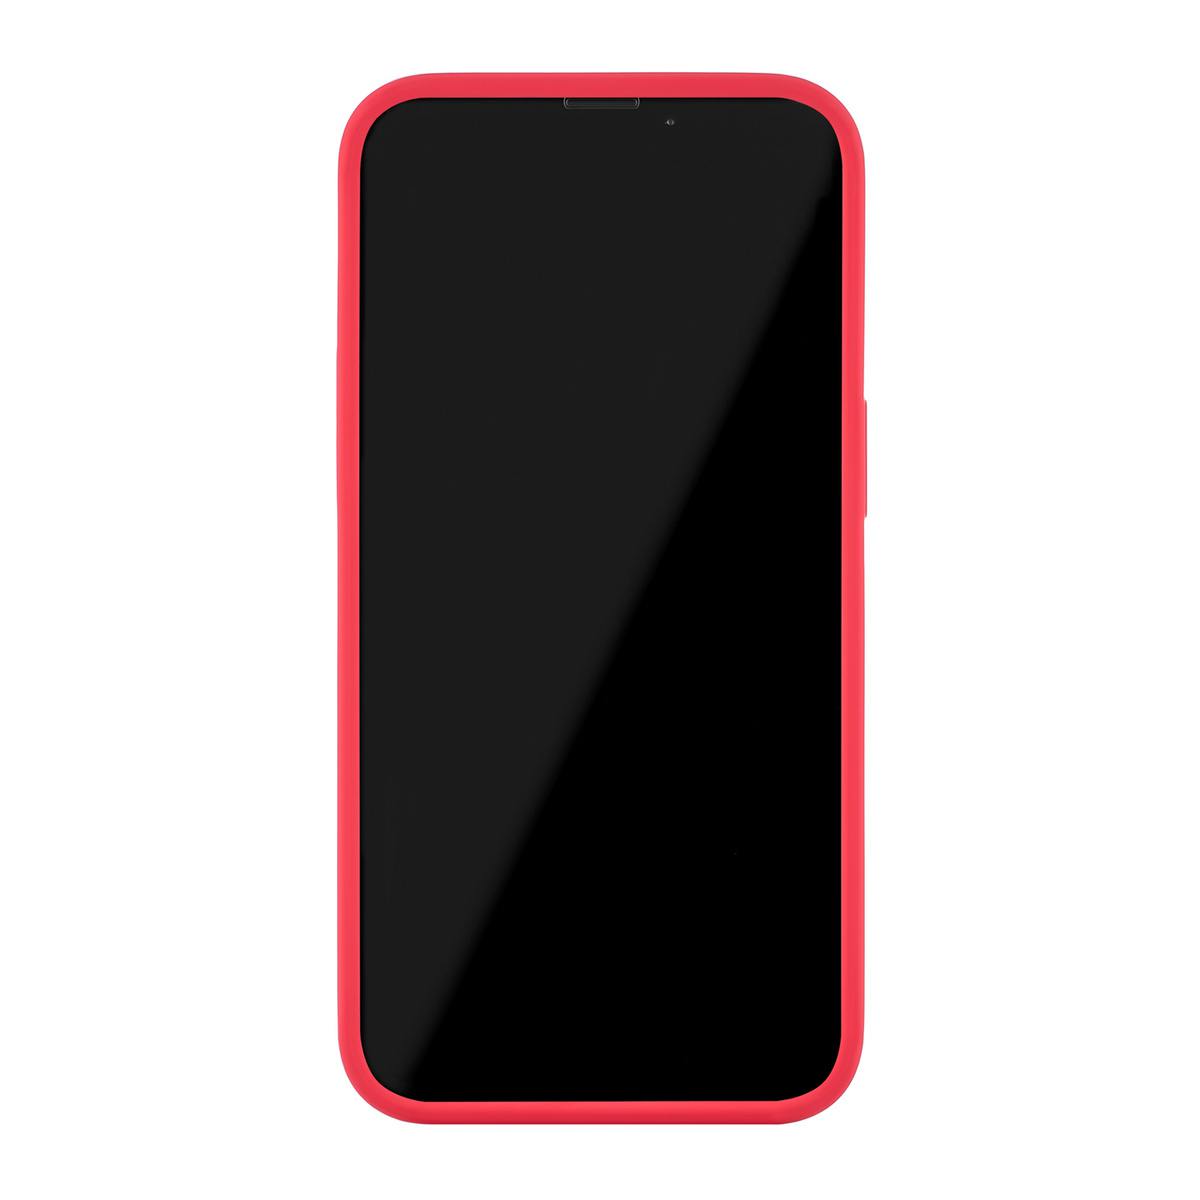 Чехол Ubear Touch Case для iPhone 13 pro красный